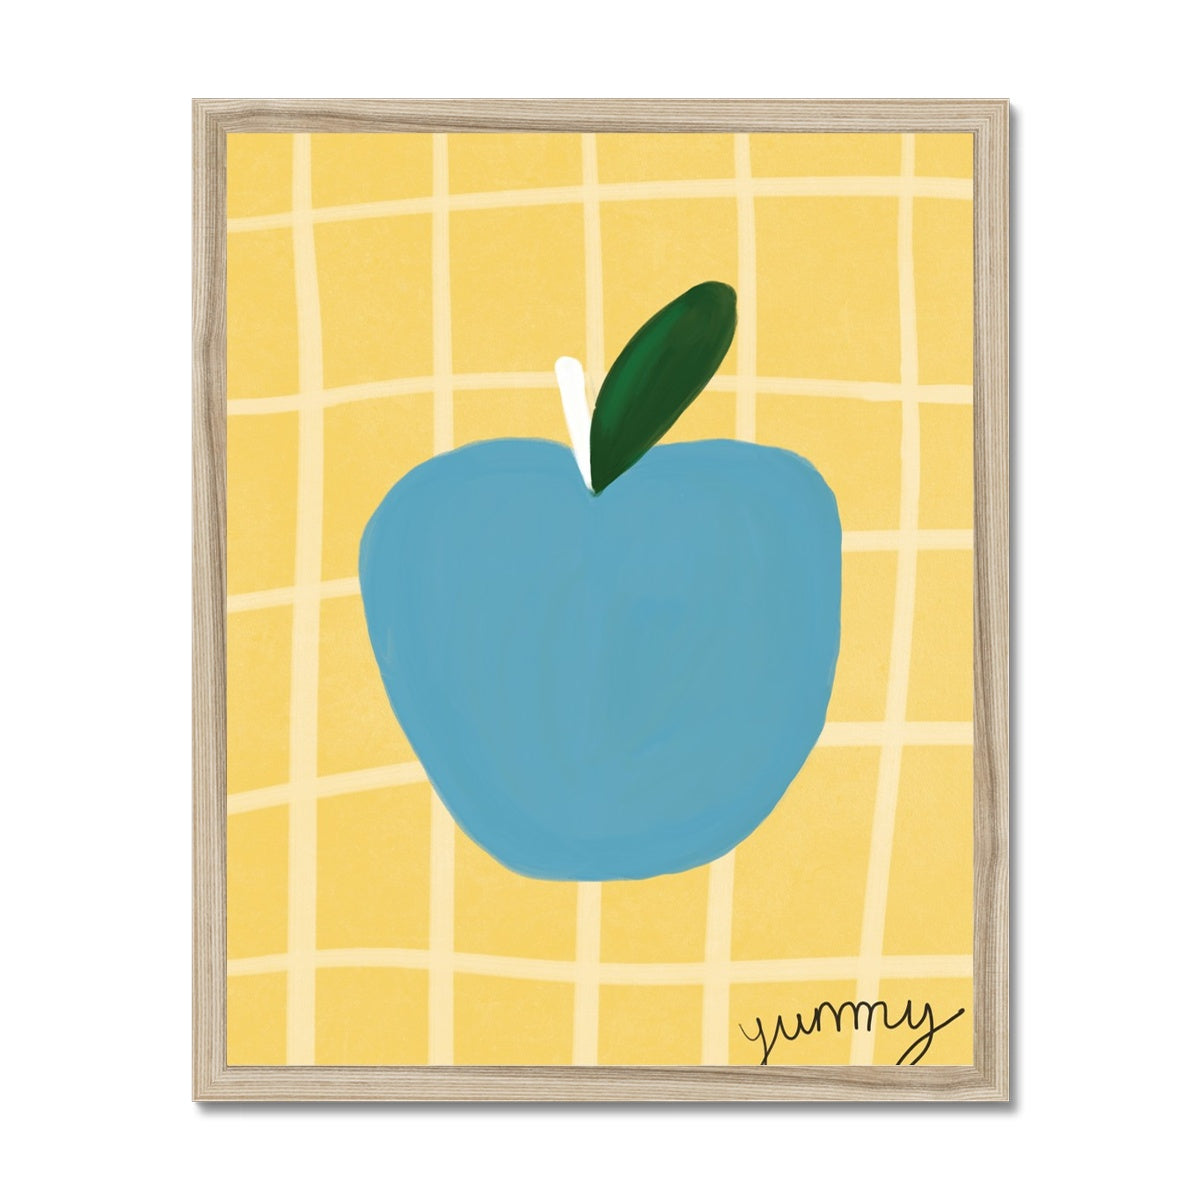 Yummy Apple Print - Yellow, Blue Framed Print